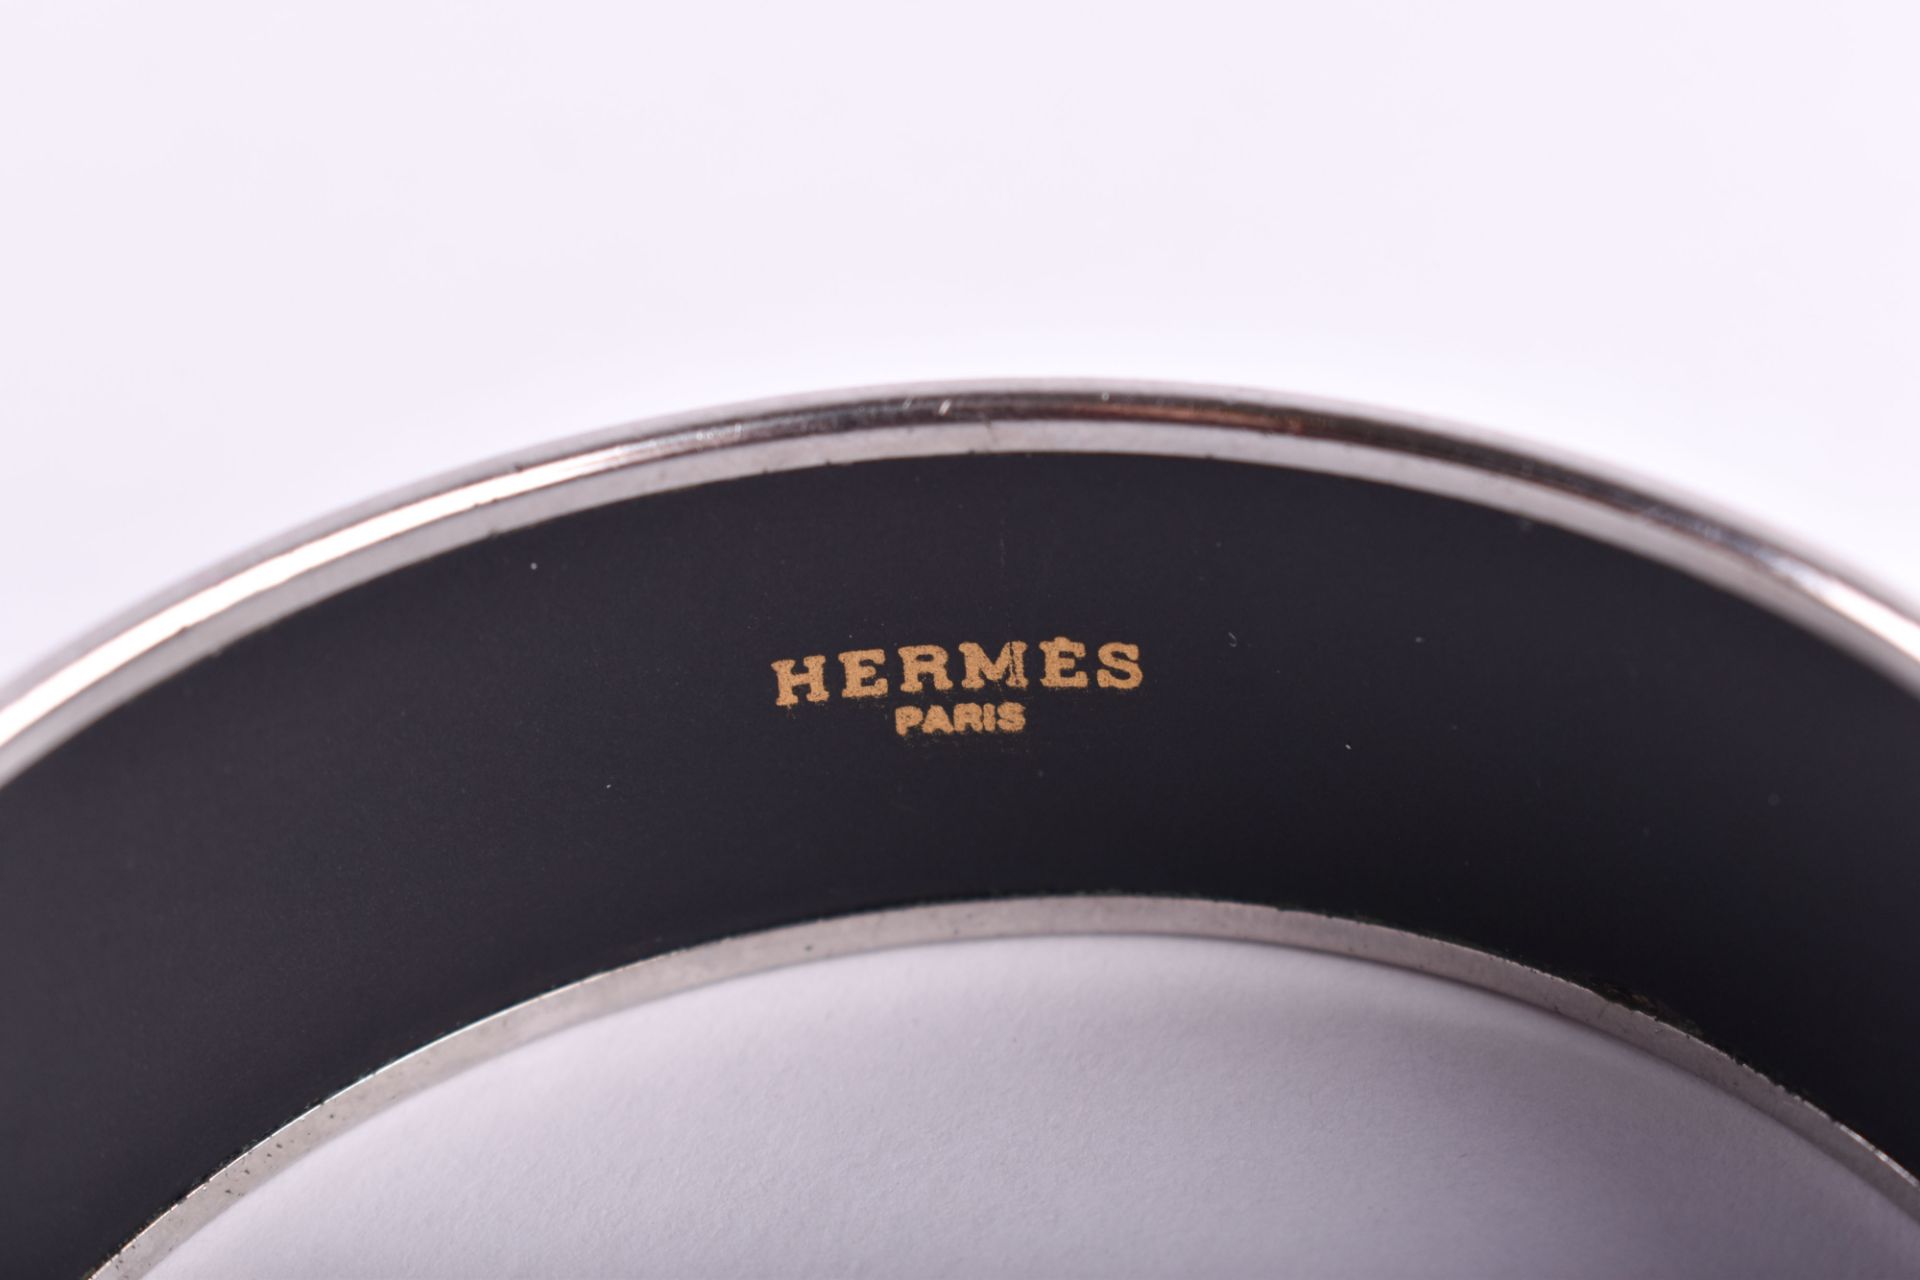  Vintage enamel bangle Hermes Paris - Image 4 of 5